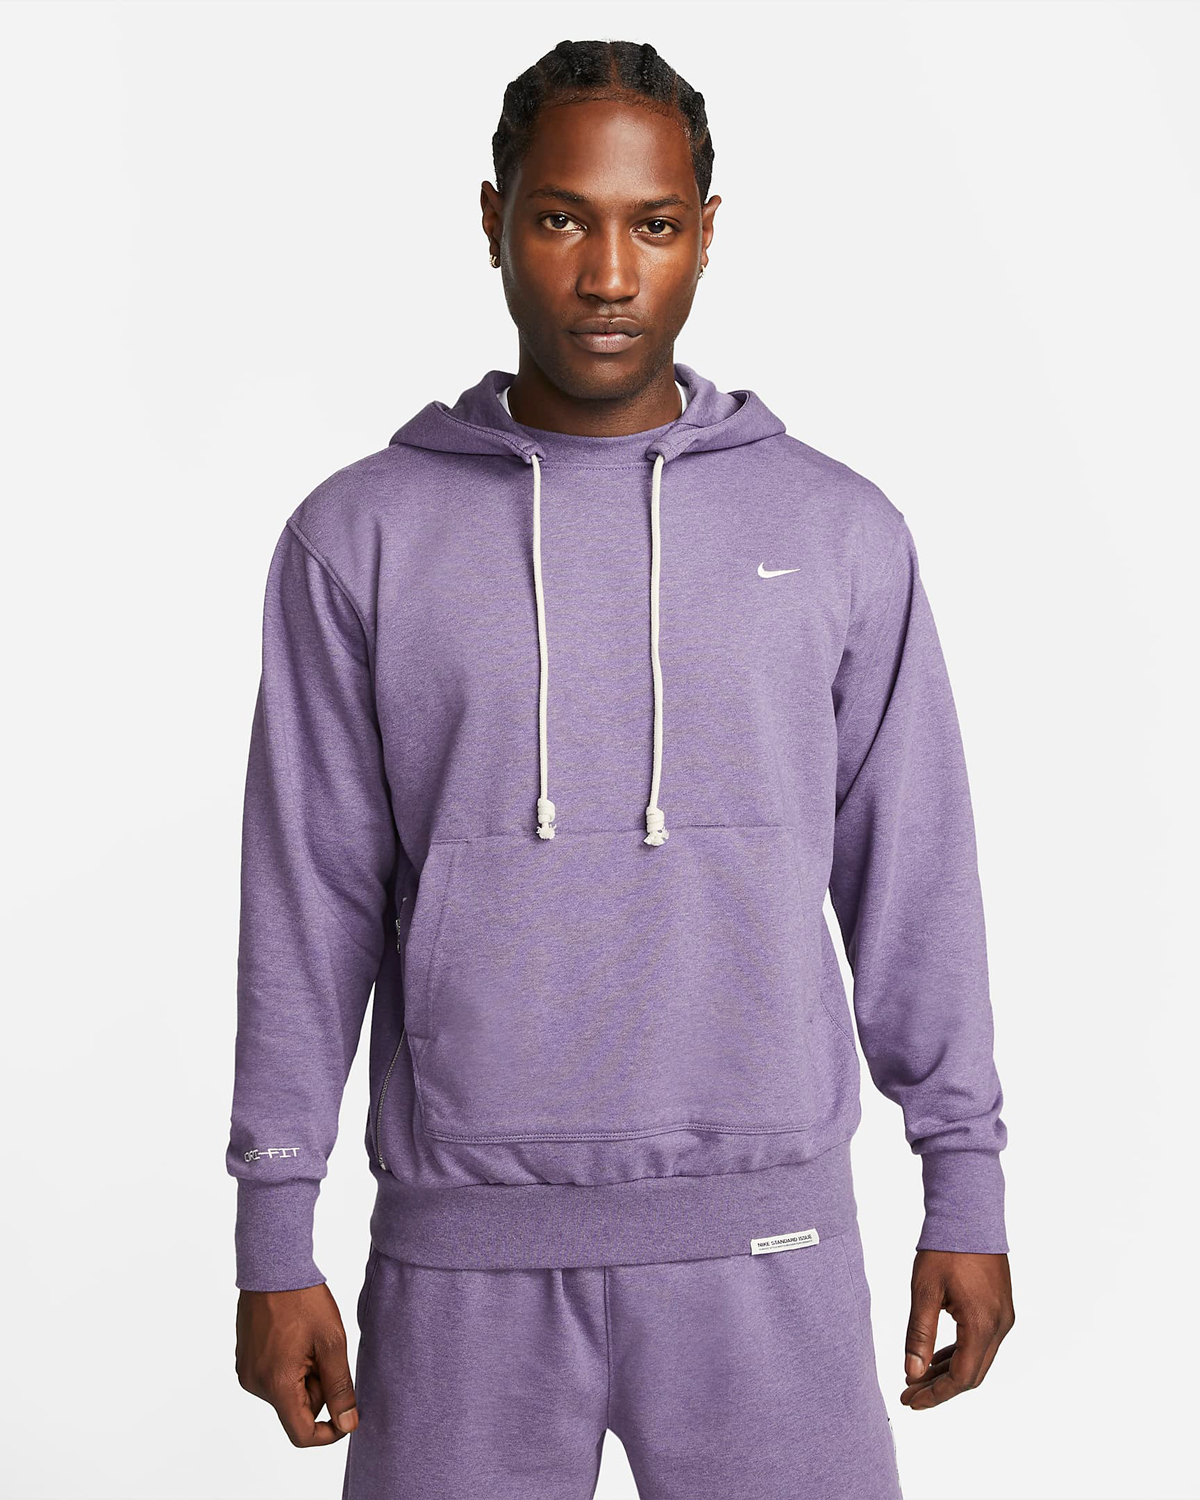 Nike-Standard-Issue-Hoodie-Canyon-Purple